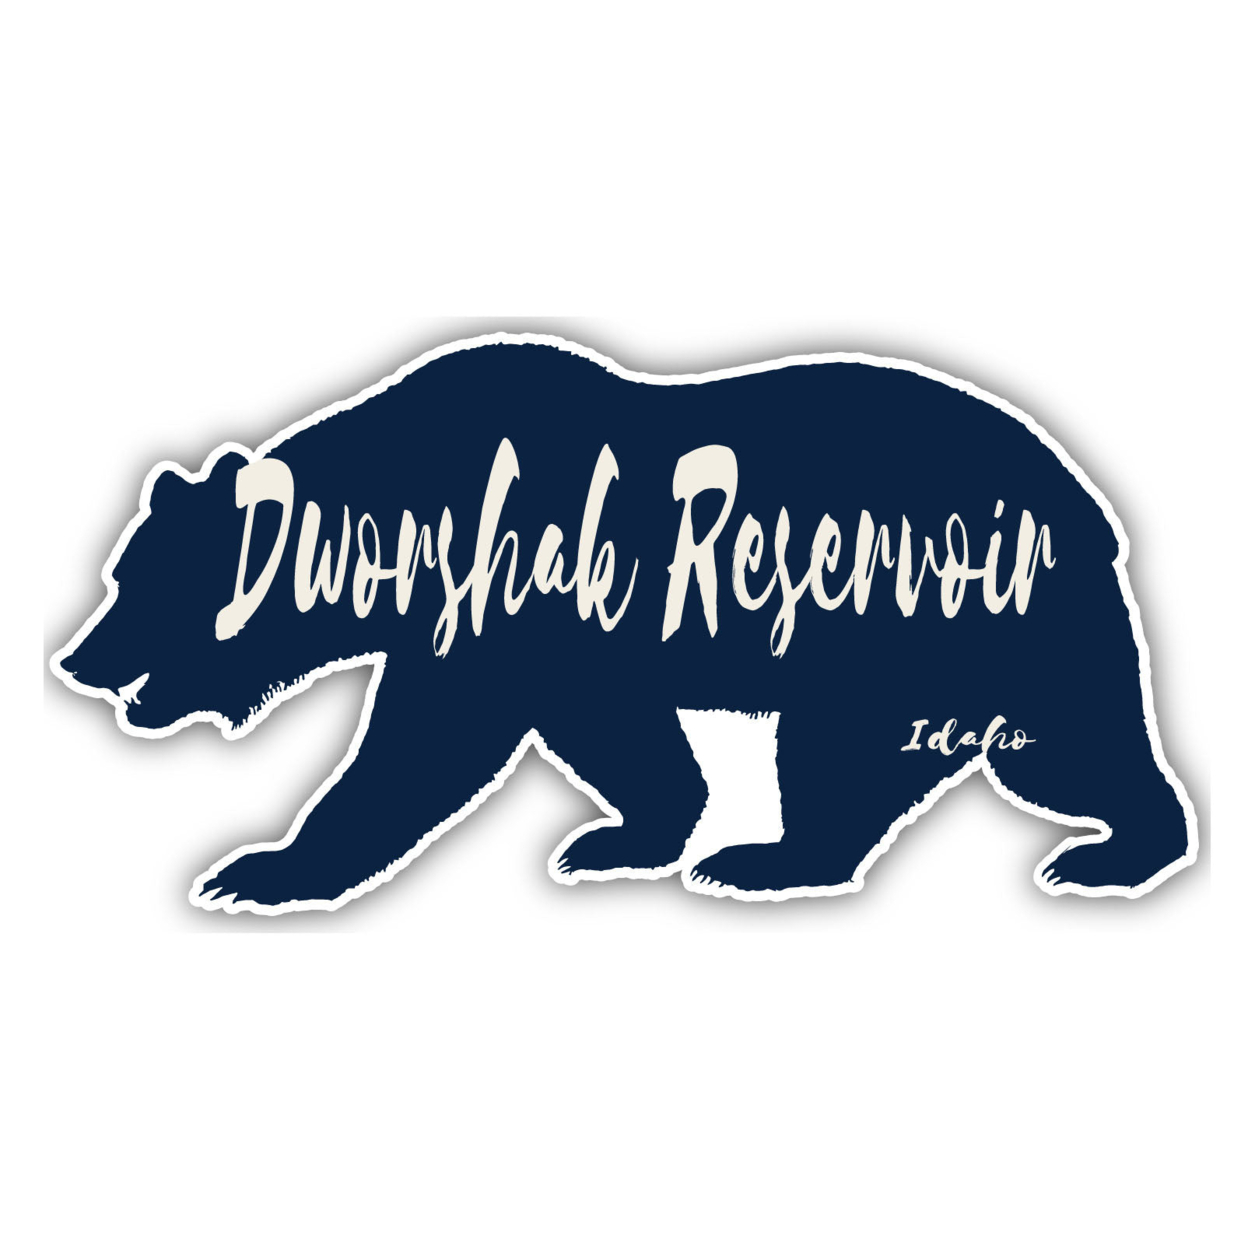 Dworshak Reservoir Idaho Souvenir Decorative Stickers (Choose Theme And Size) - 4-Pack, 4-Inch, Bear